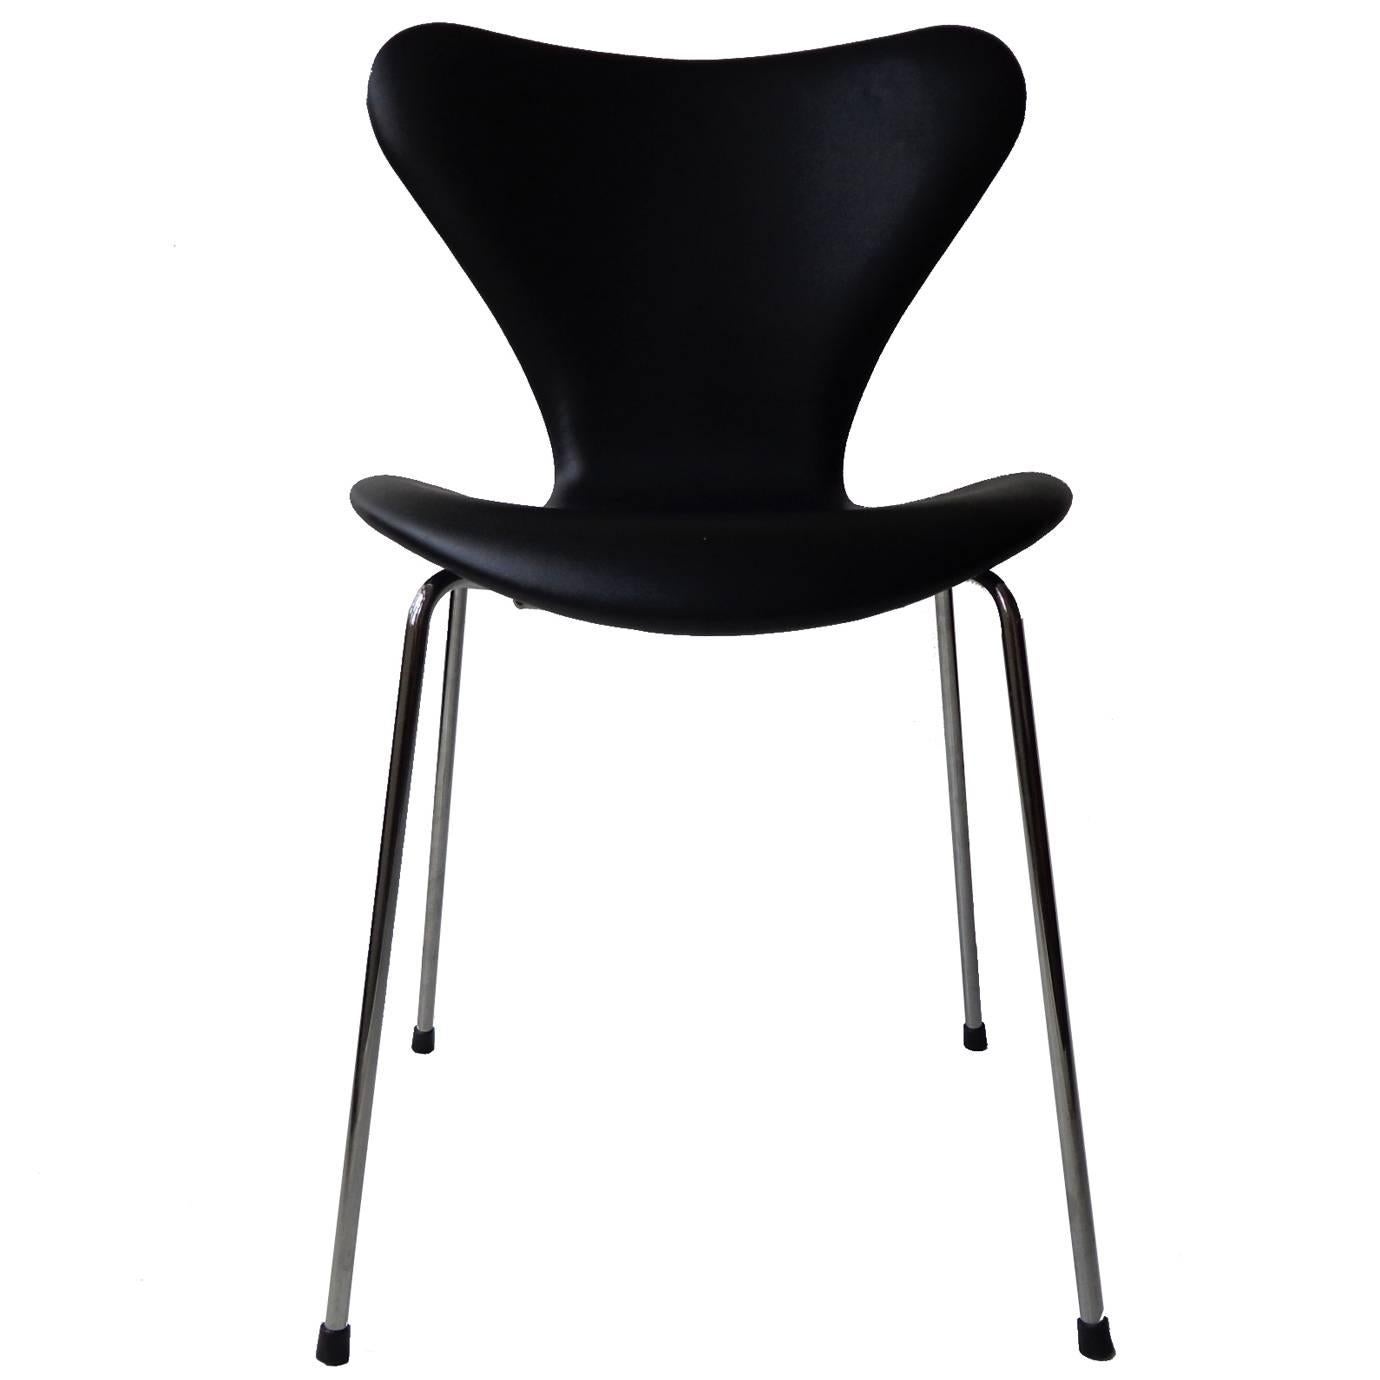 Danish Arne Jacobsen Chair in Original Black Leather, Fritz Hansen Modern, 1950s